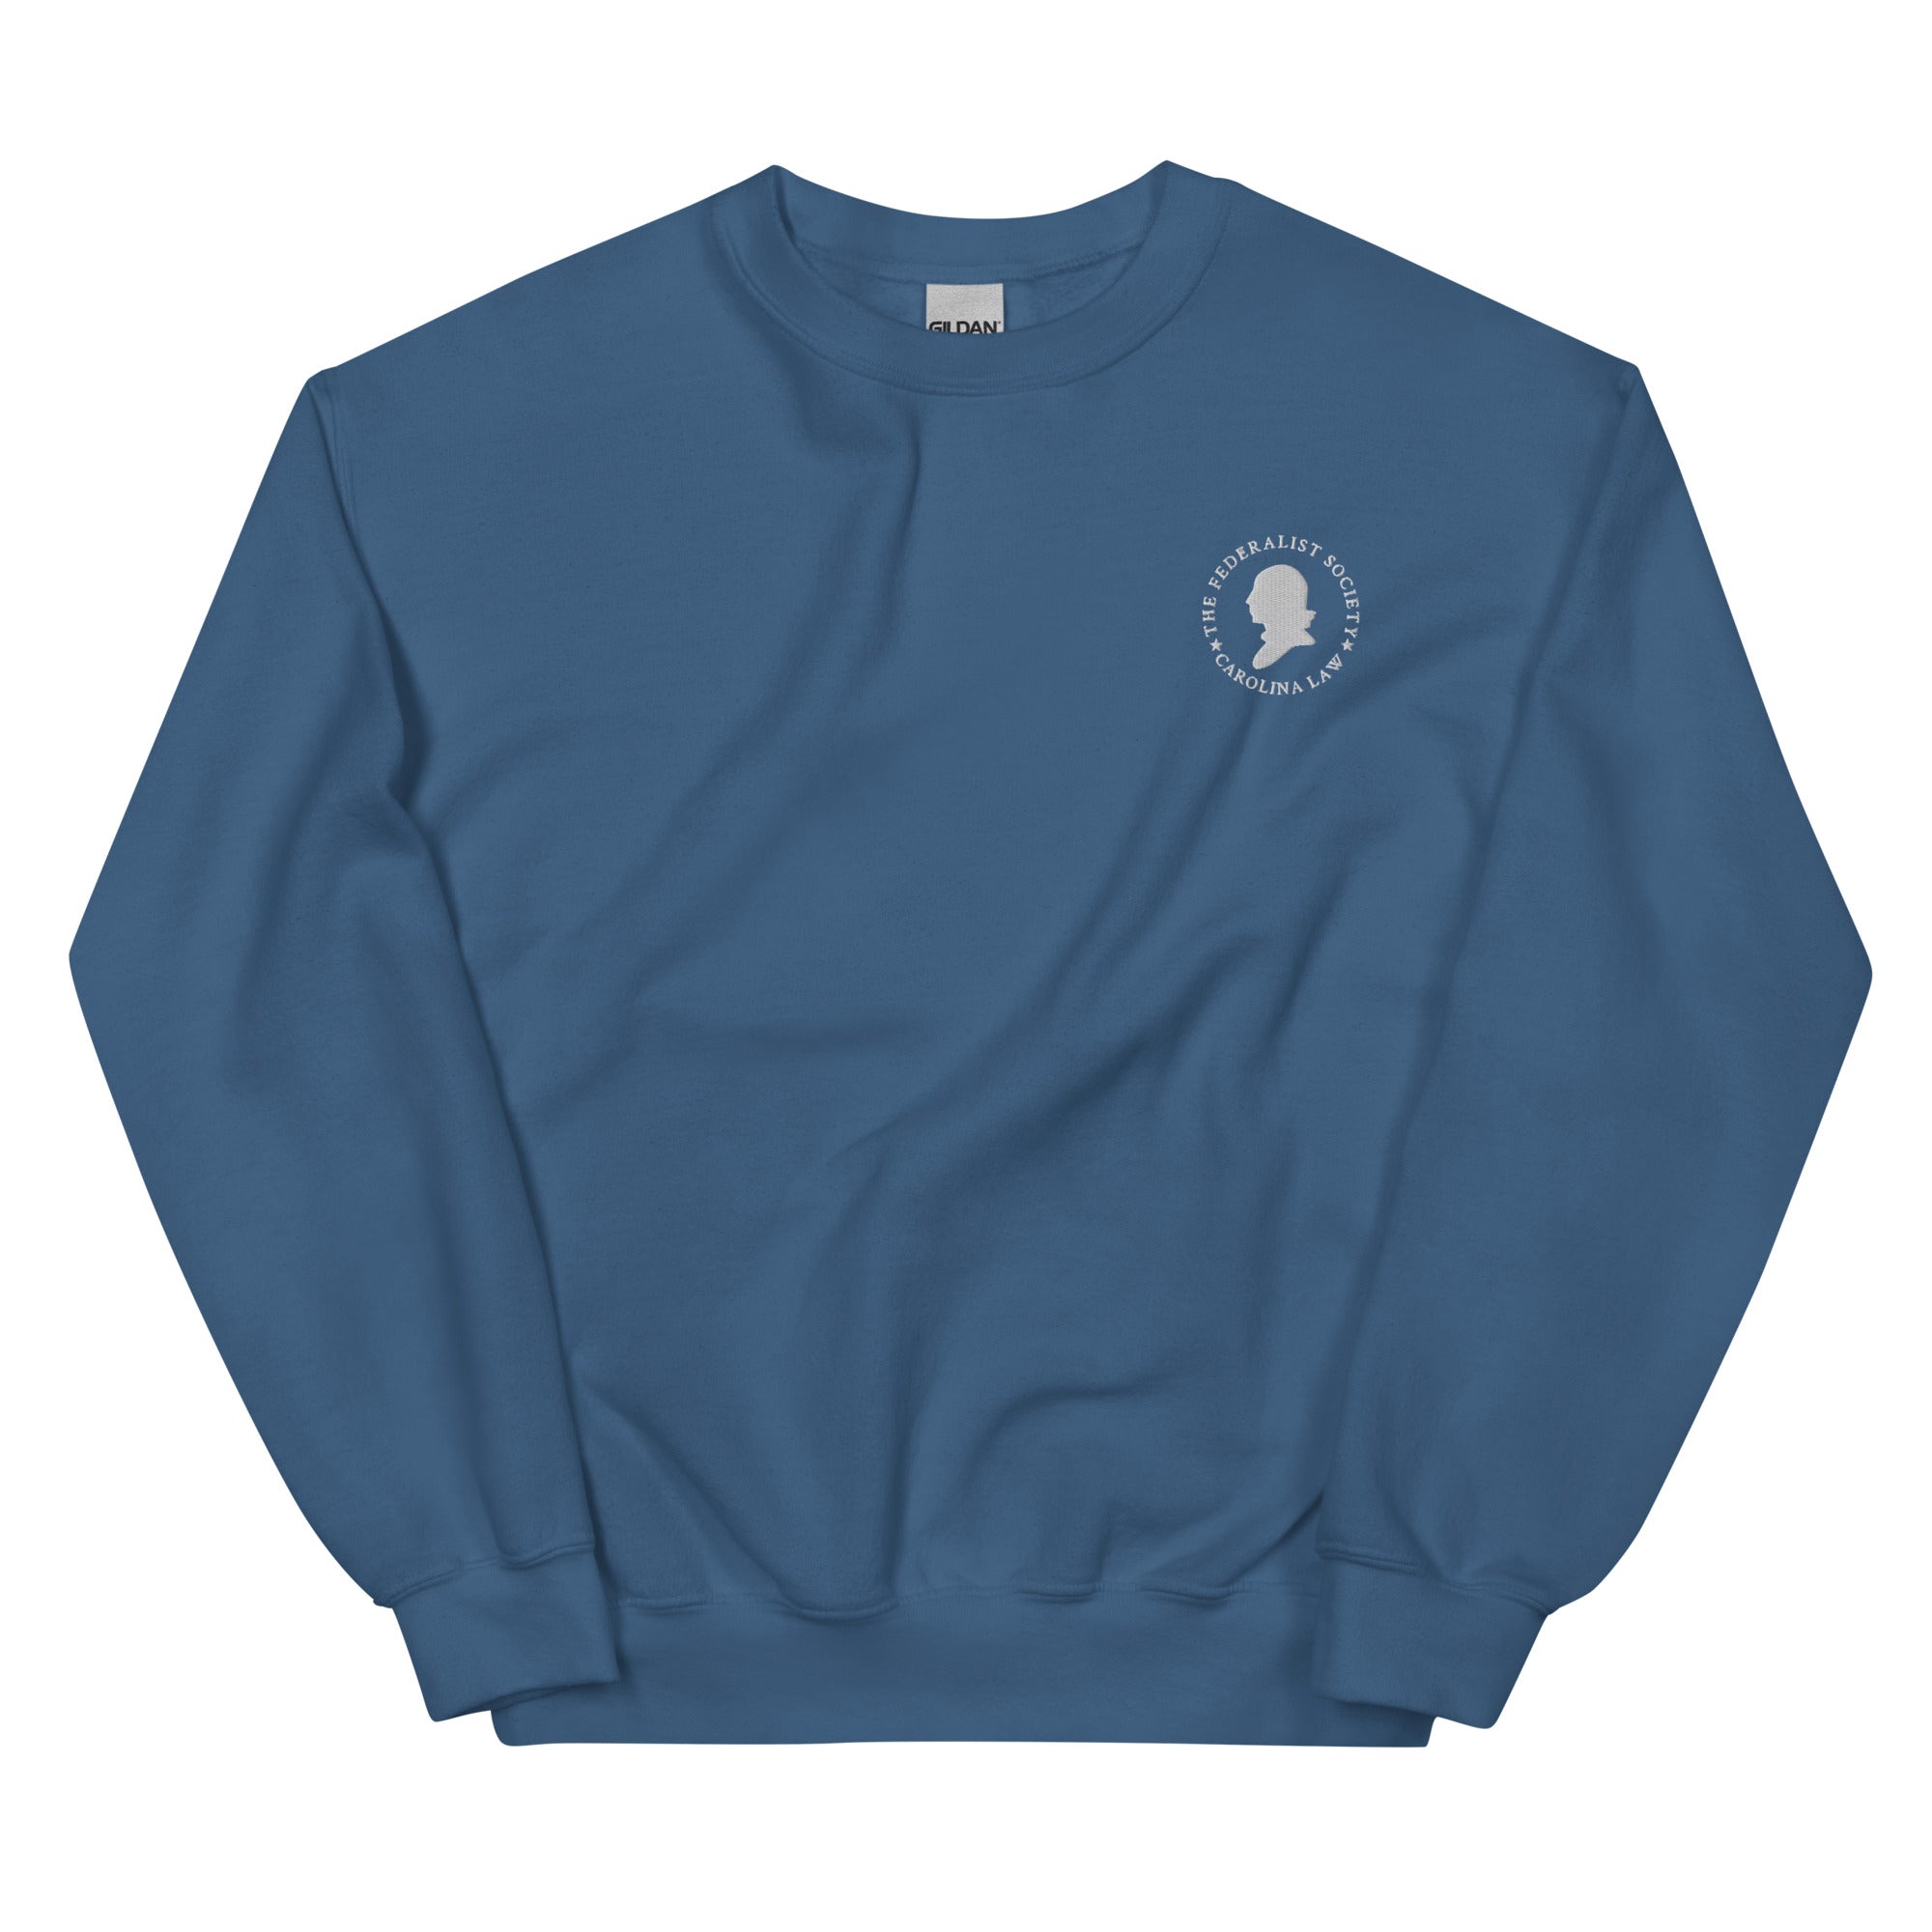 Navy Sweatshirt (Carolina Law Fed Soc)